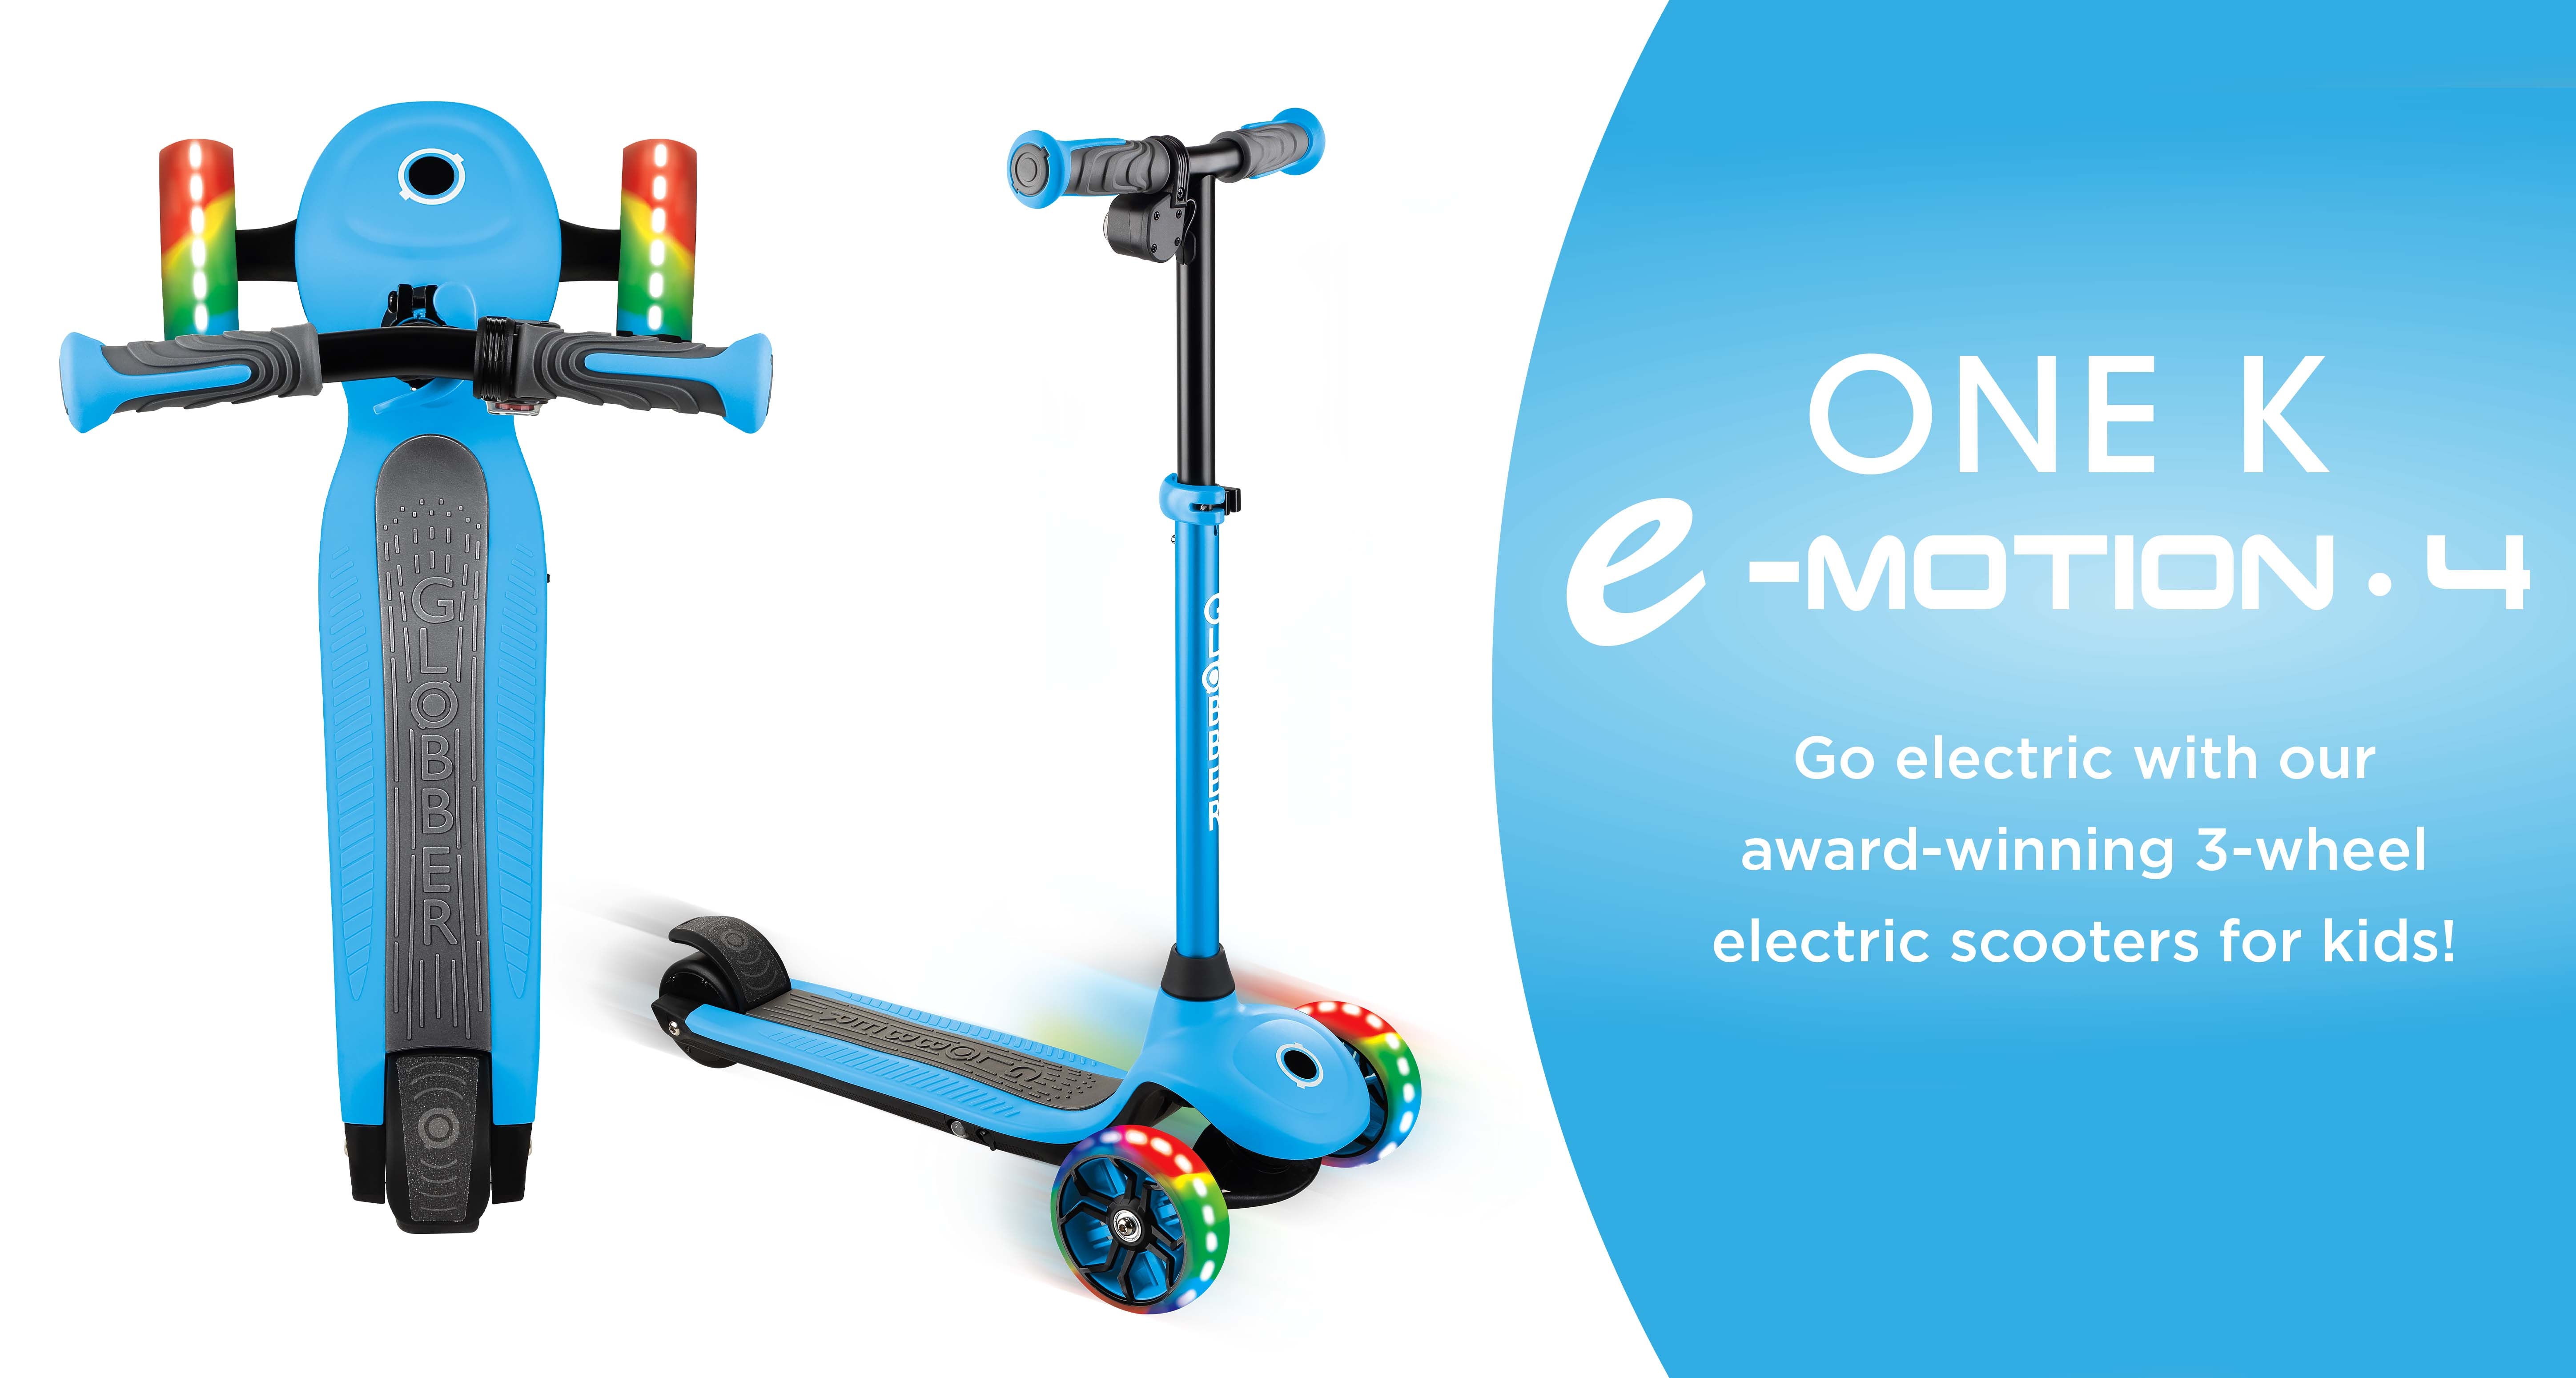 Globber-ONE-K-E-MOTION-4-award-winning-3-wheel-electric-scooter-for-kids